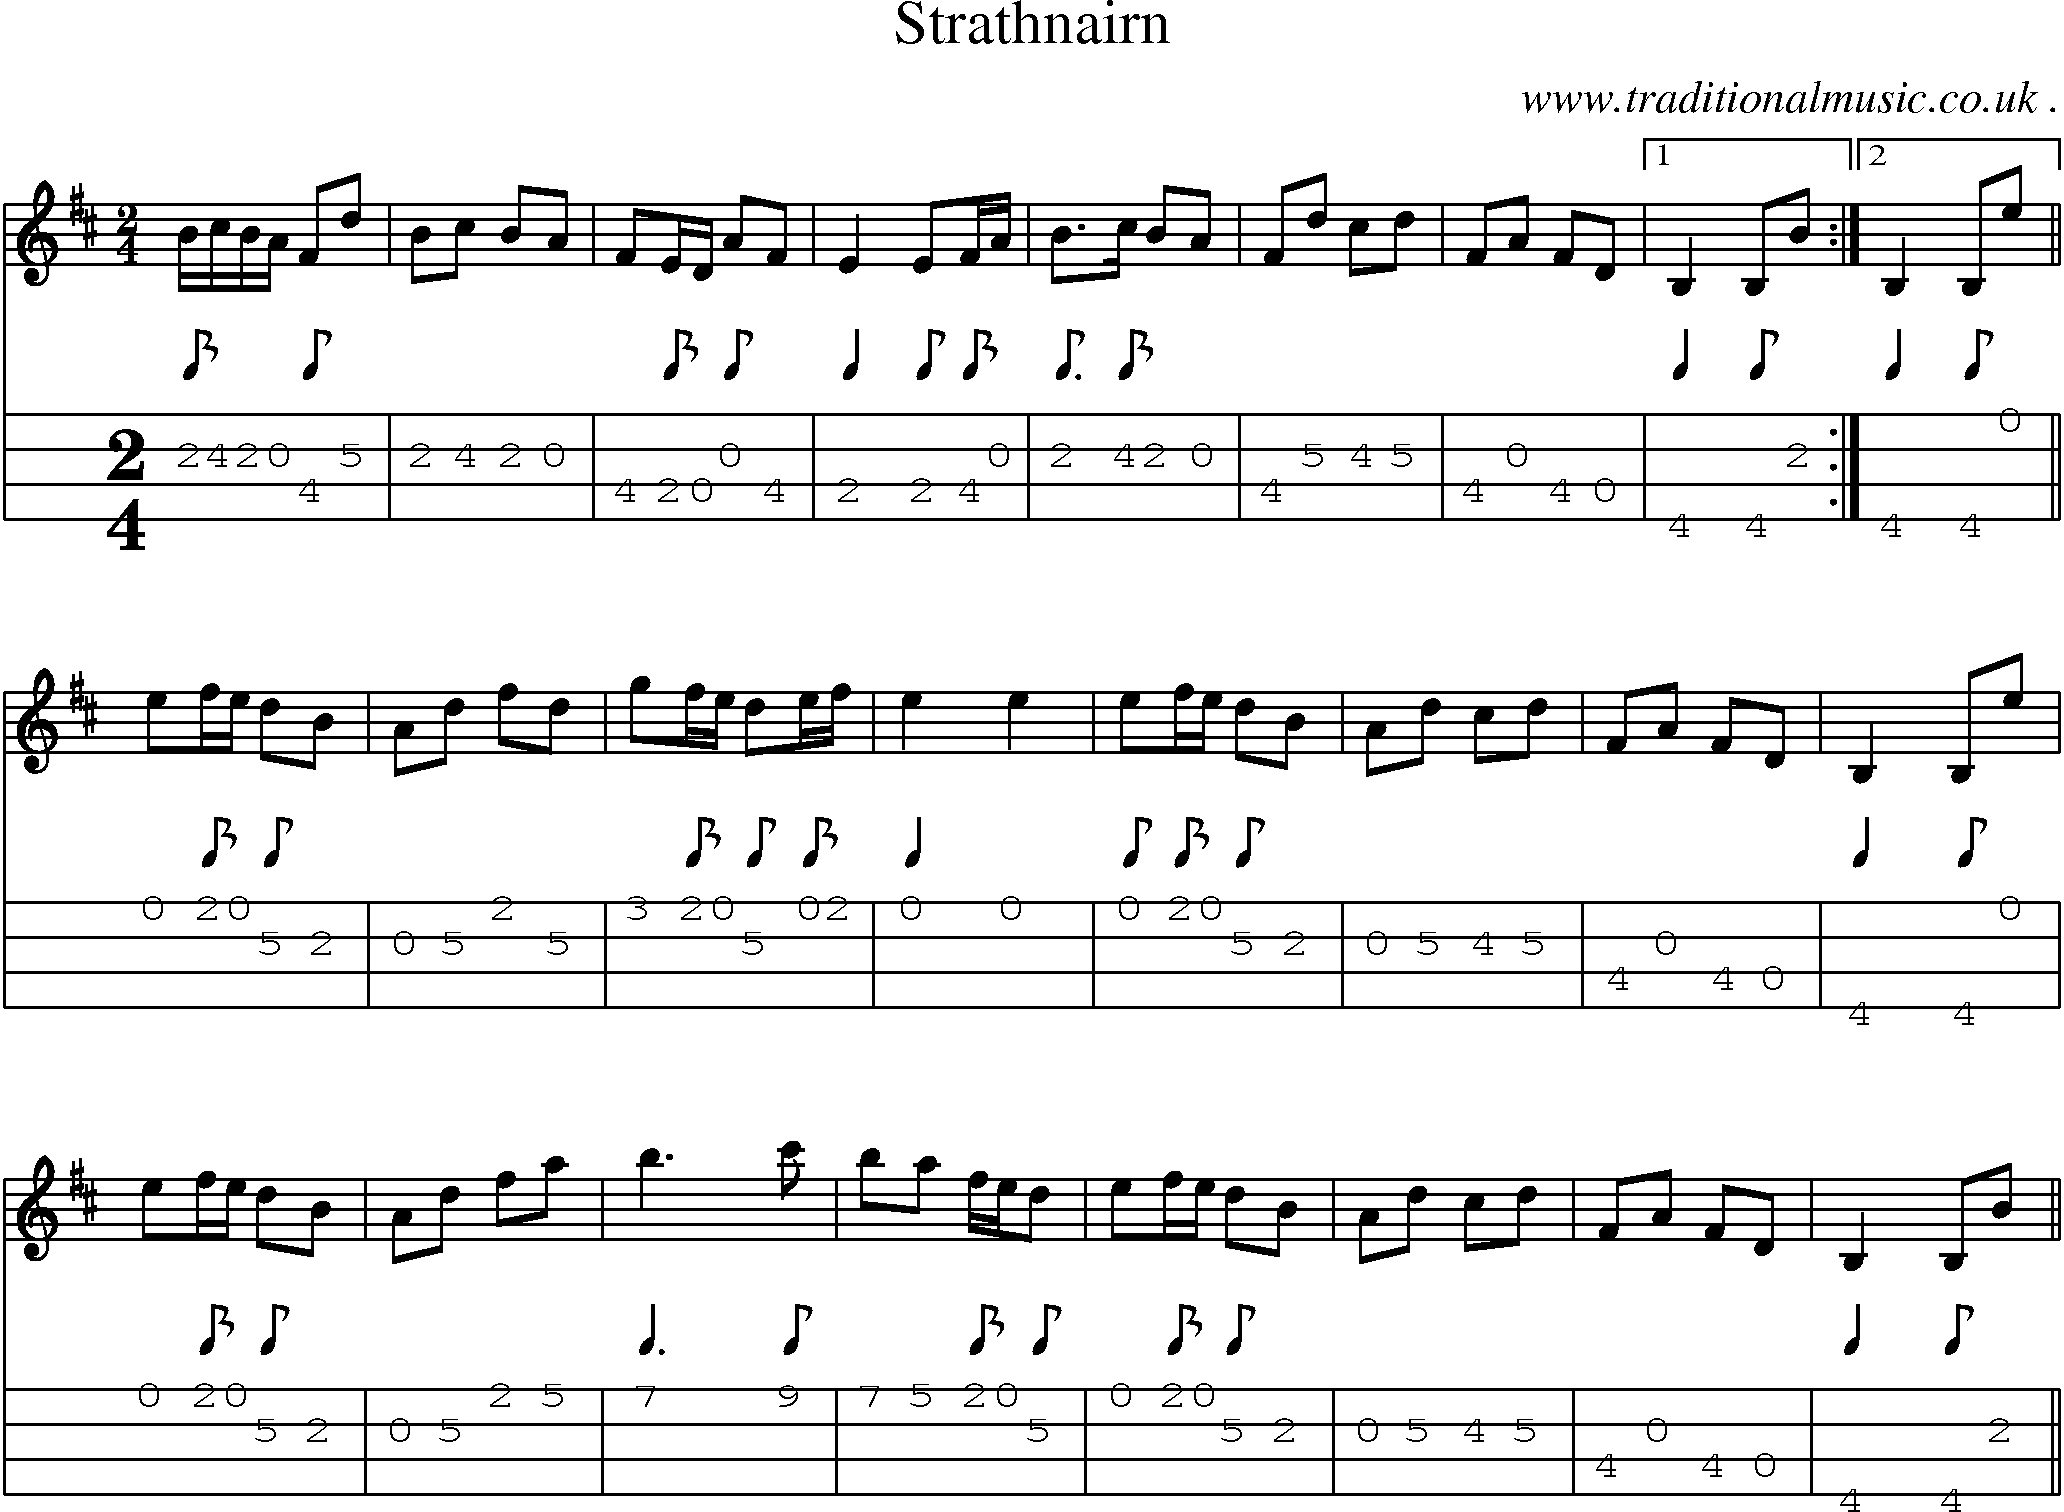 Sheet-Music and Mandolin Tabs for Strathnairn